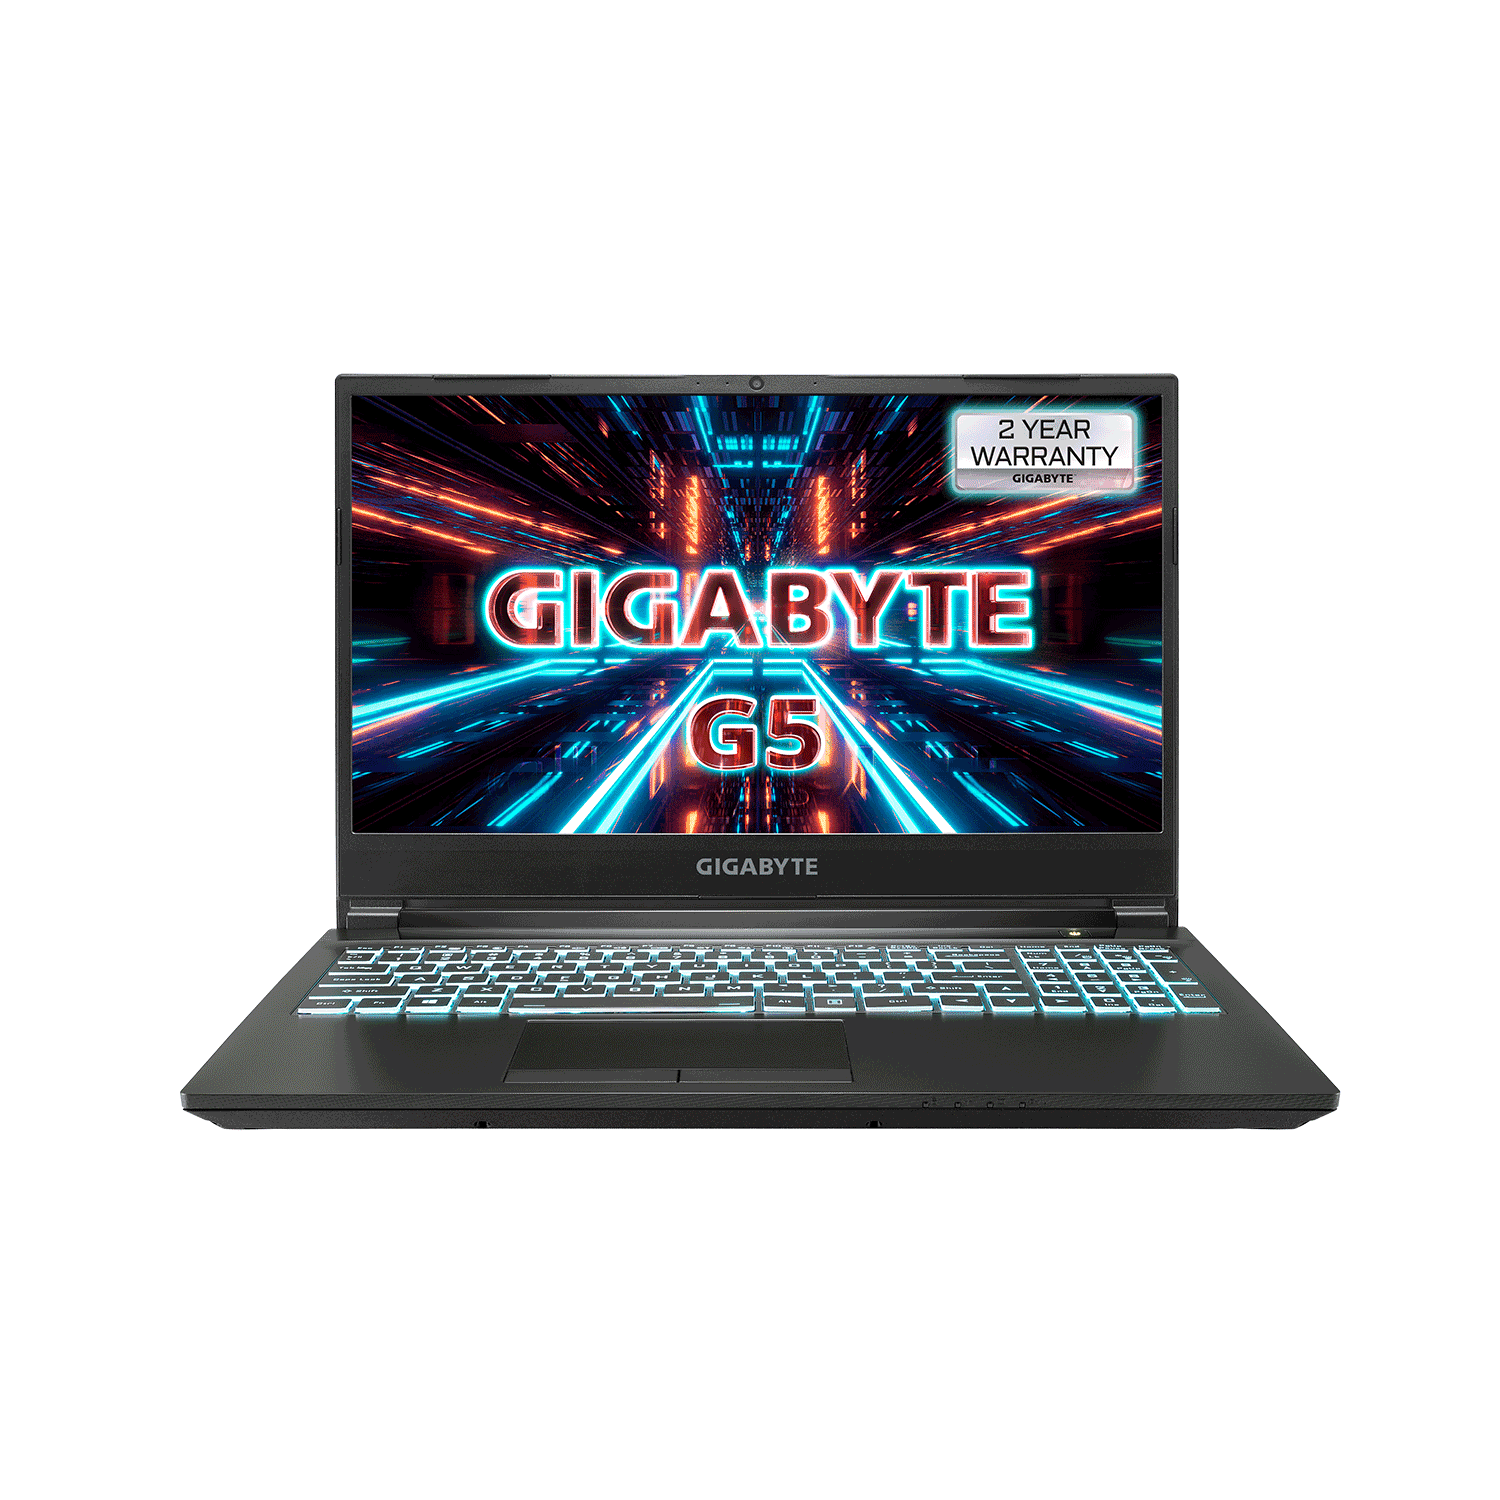 GIGABYTE G5 Core i5-10500H 8GB 512GB SSD GeForce RTX 3060 15.6 Inch Windows  10 Gaming Laptop